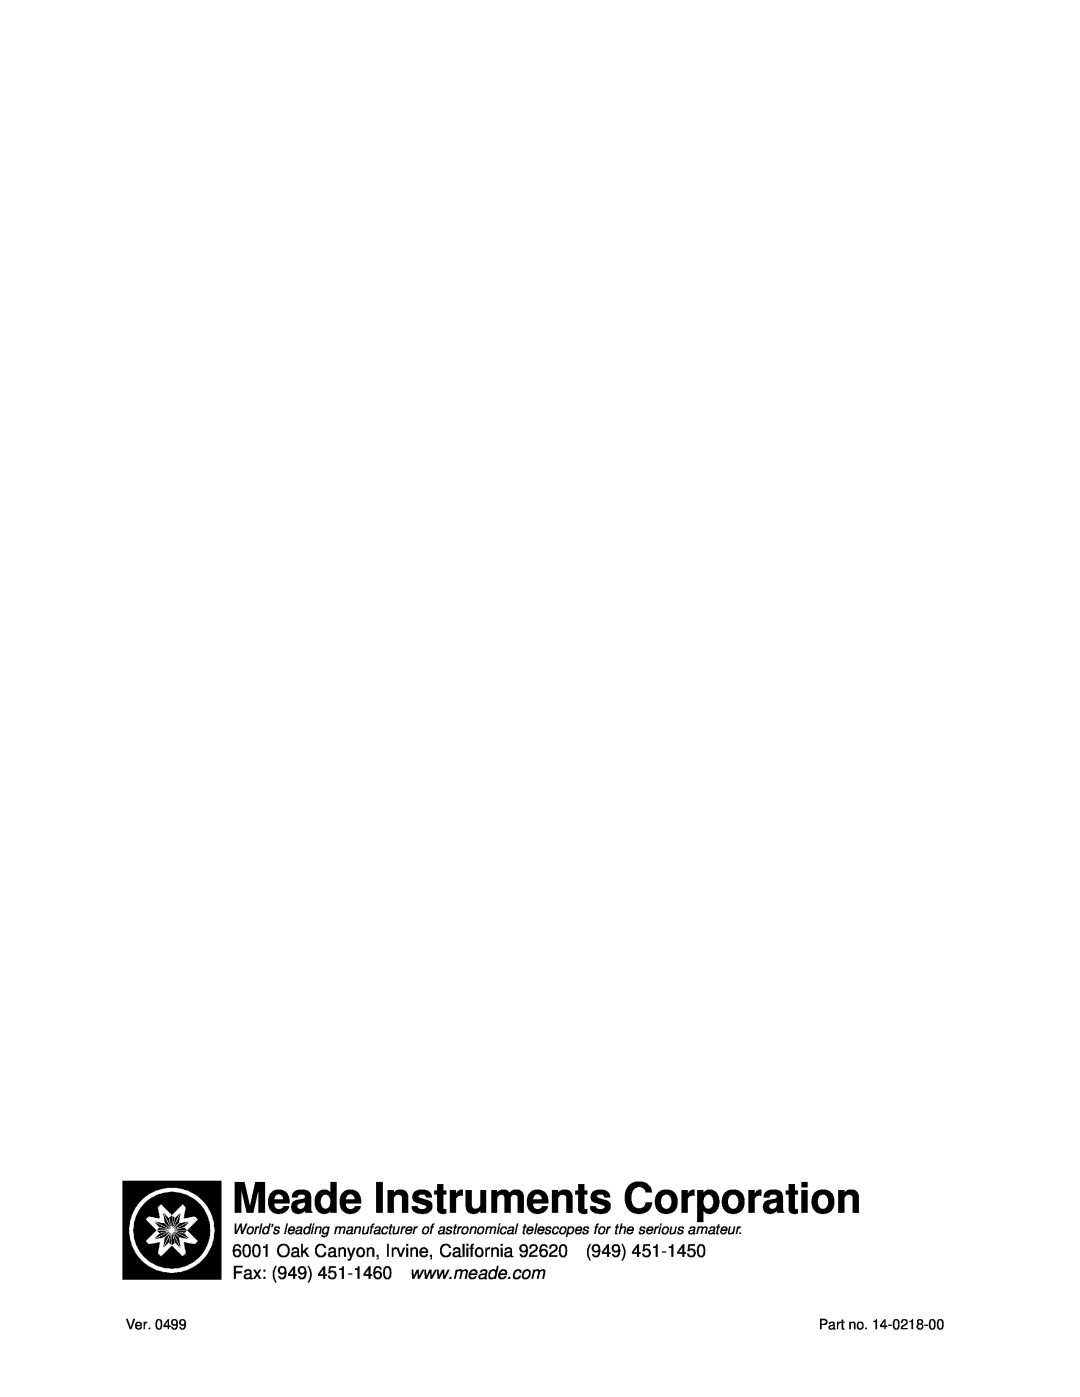 Meade 12.5 instruction manual Meade Instruments Corporation, Ver 